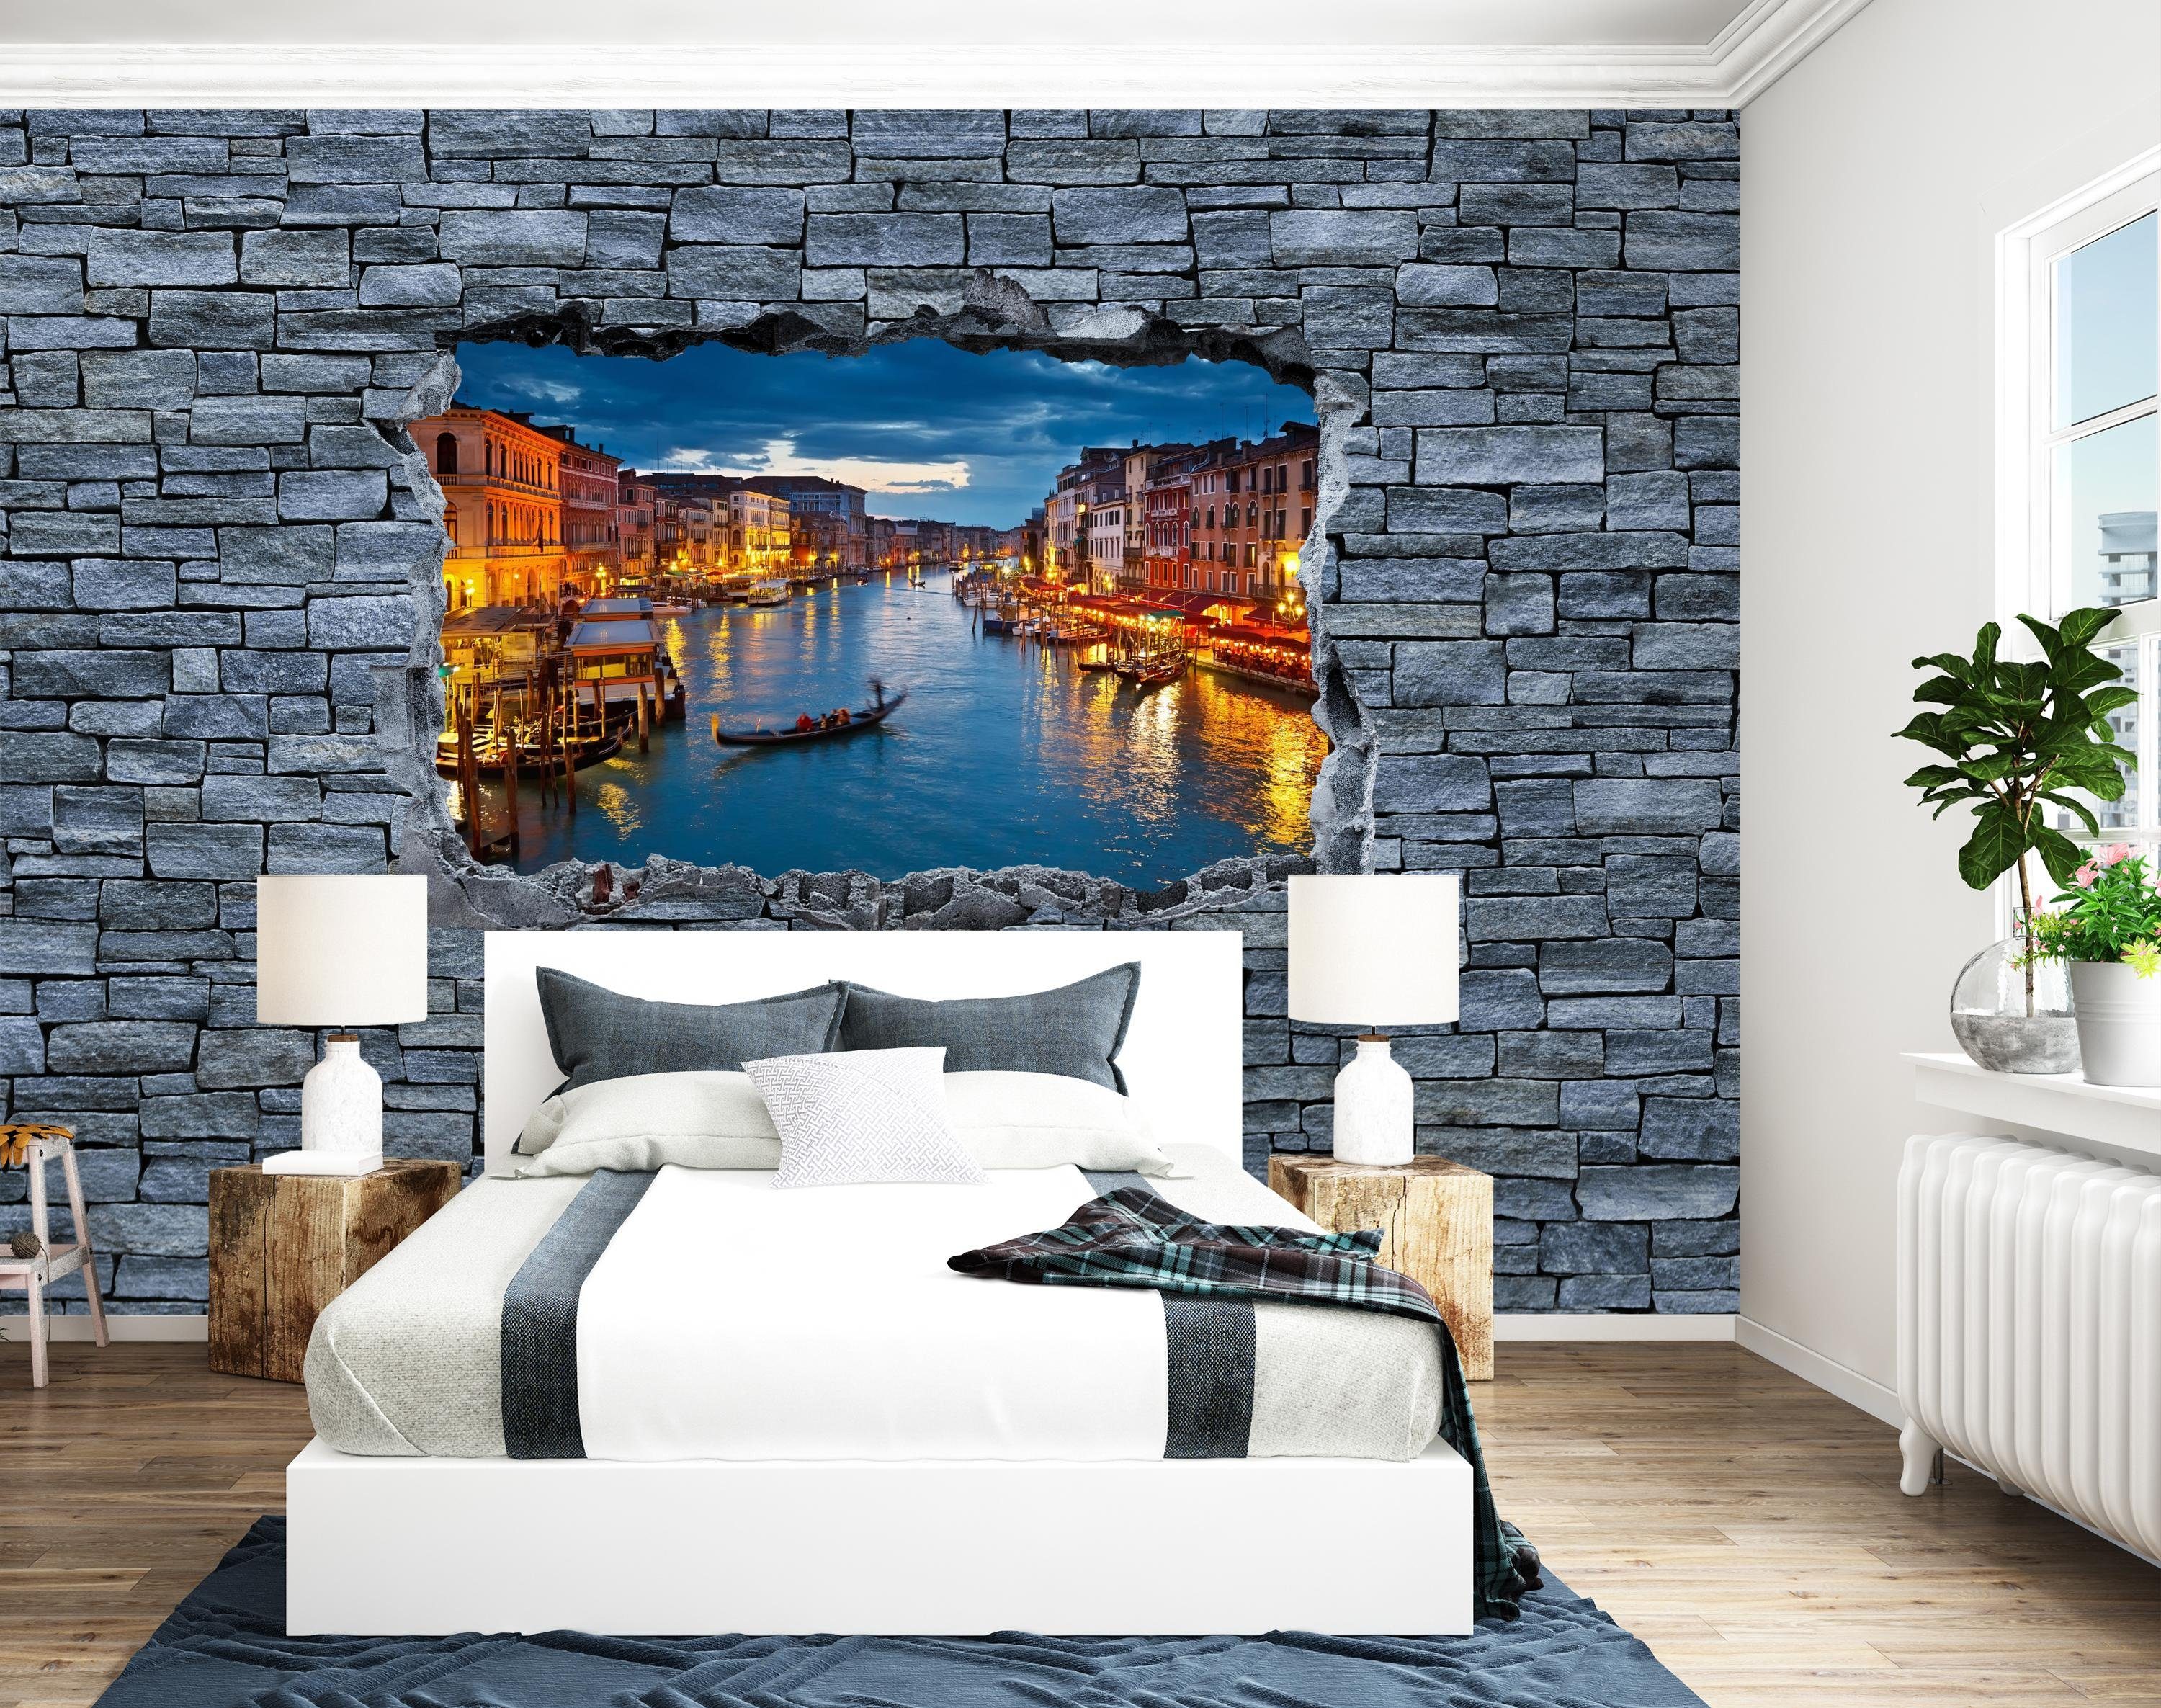 wandmotiv24 Fototapete 3D Wandtapete, Vliestapete Venedig Steinmauer, Canale glatt, - Motivtapete, matt, Grande